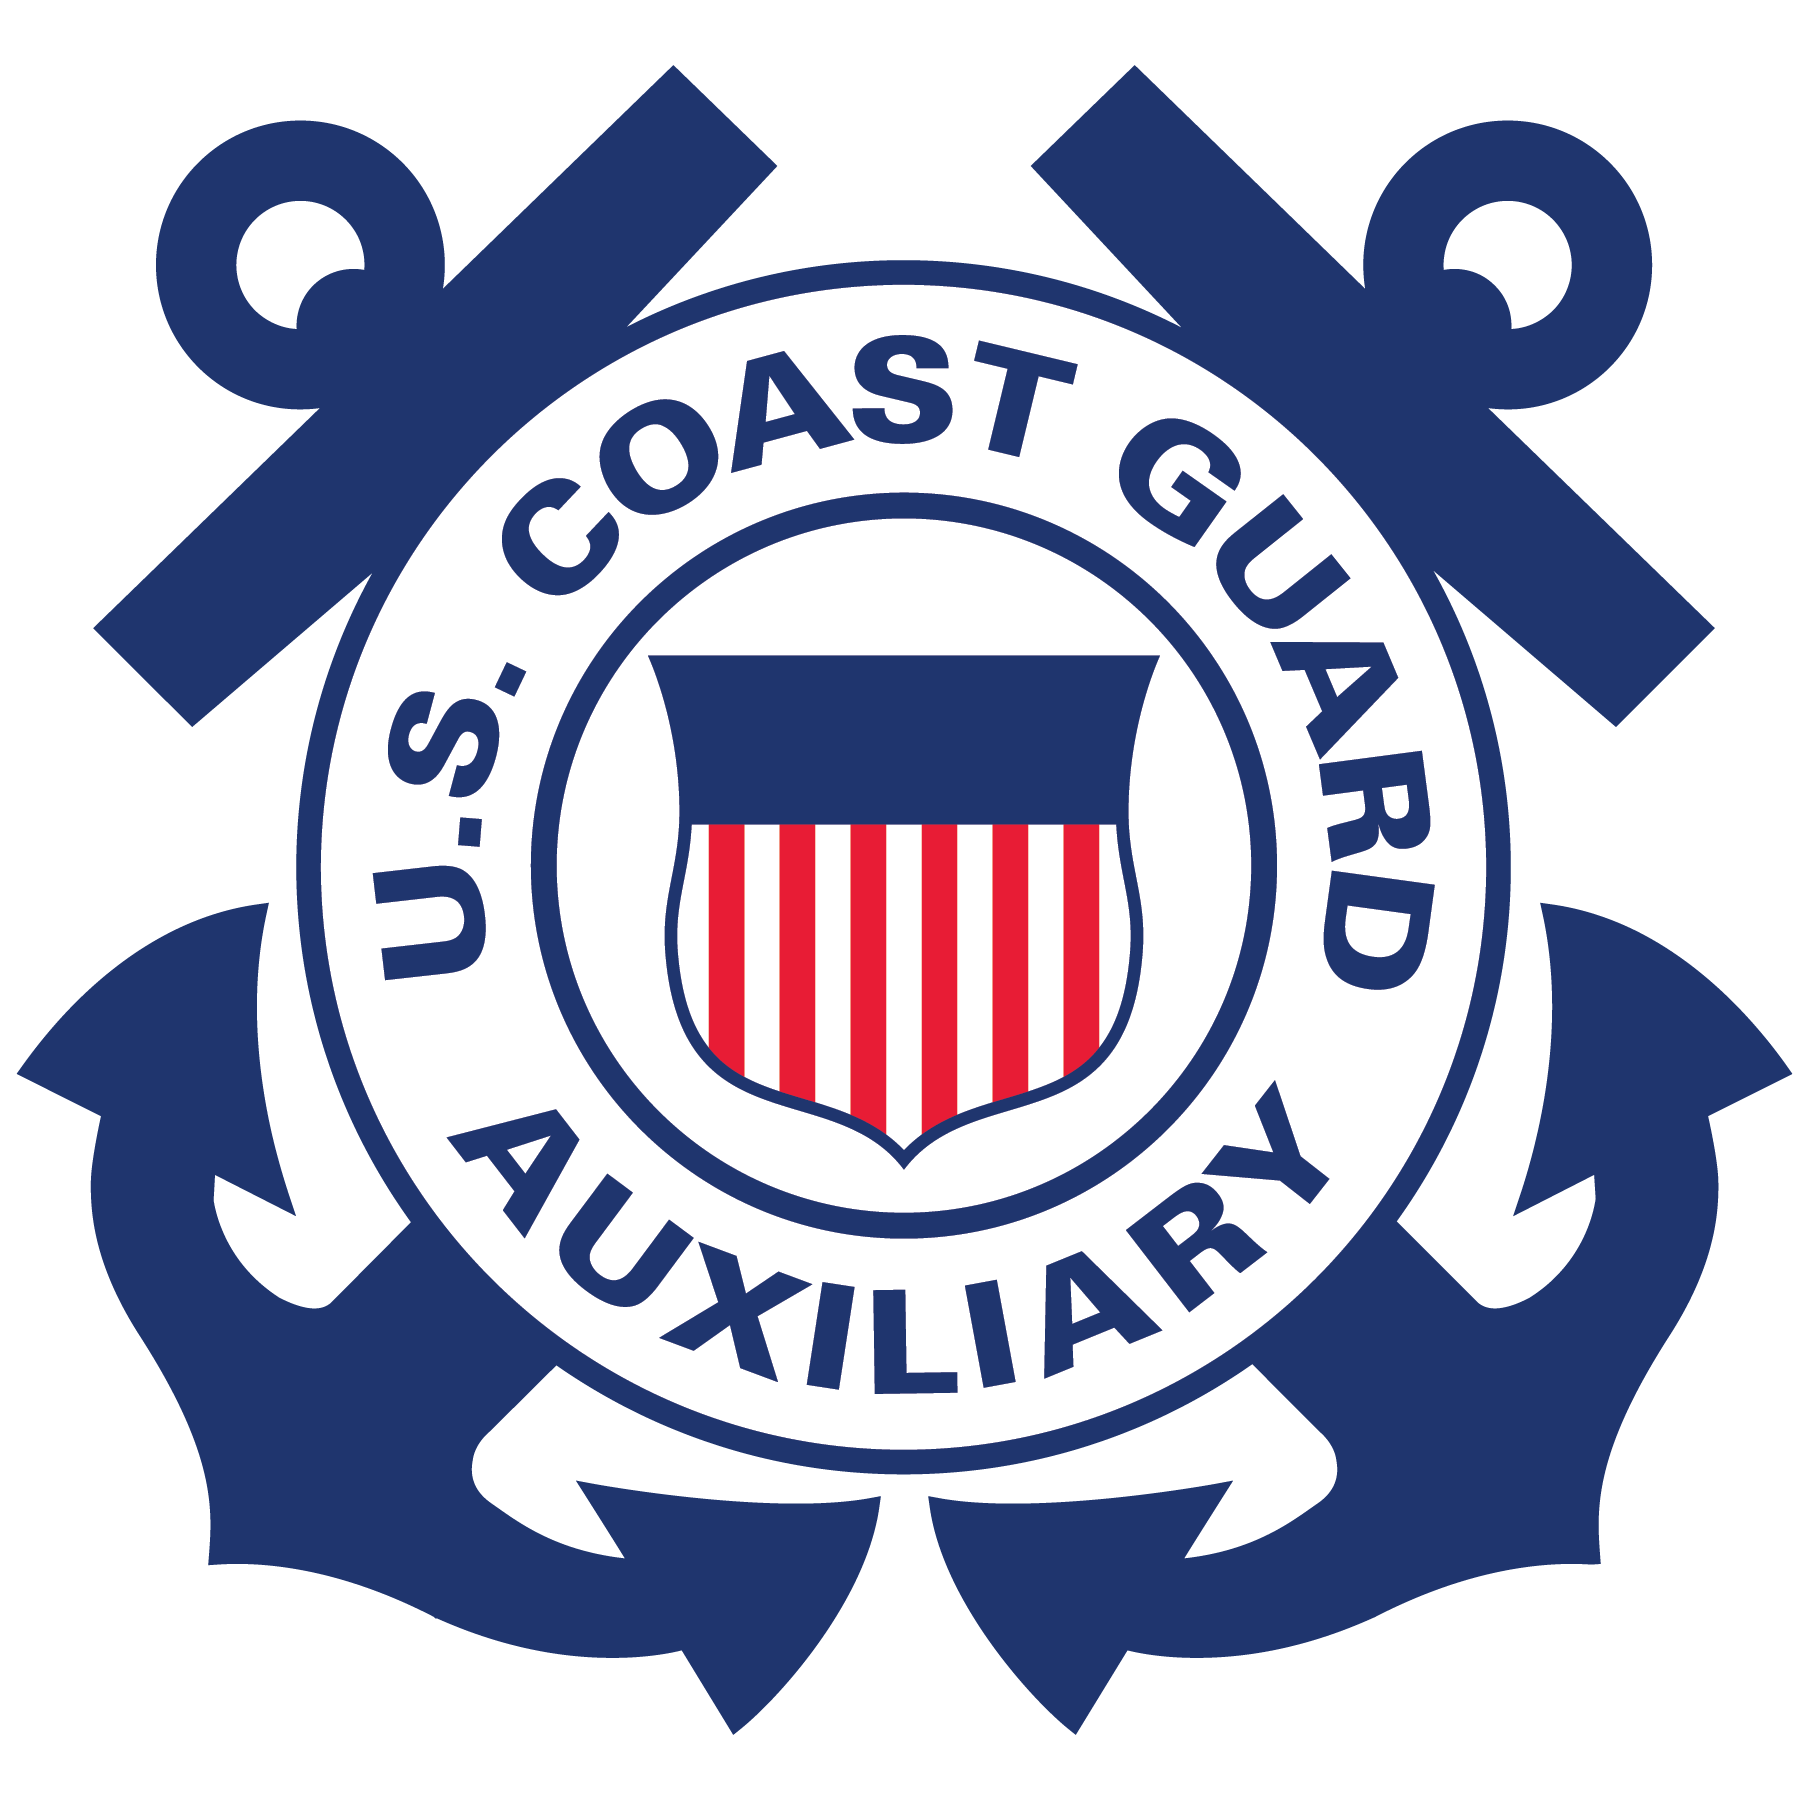 U.S. Coast Guard Auxiliary Emblem